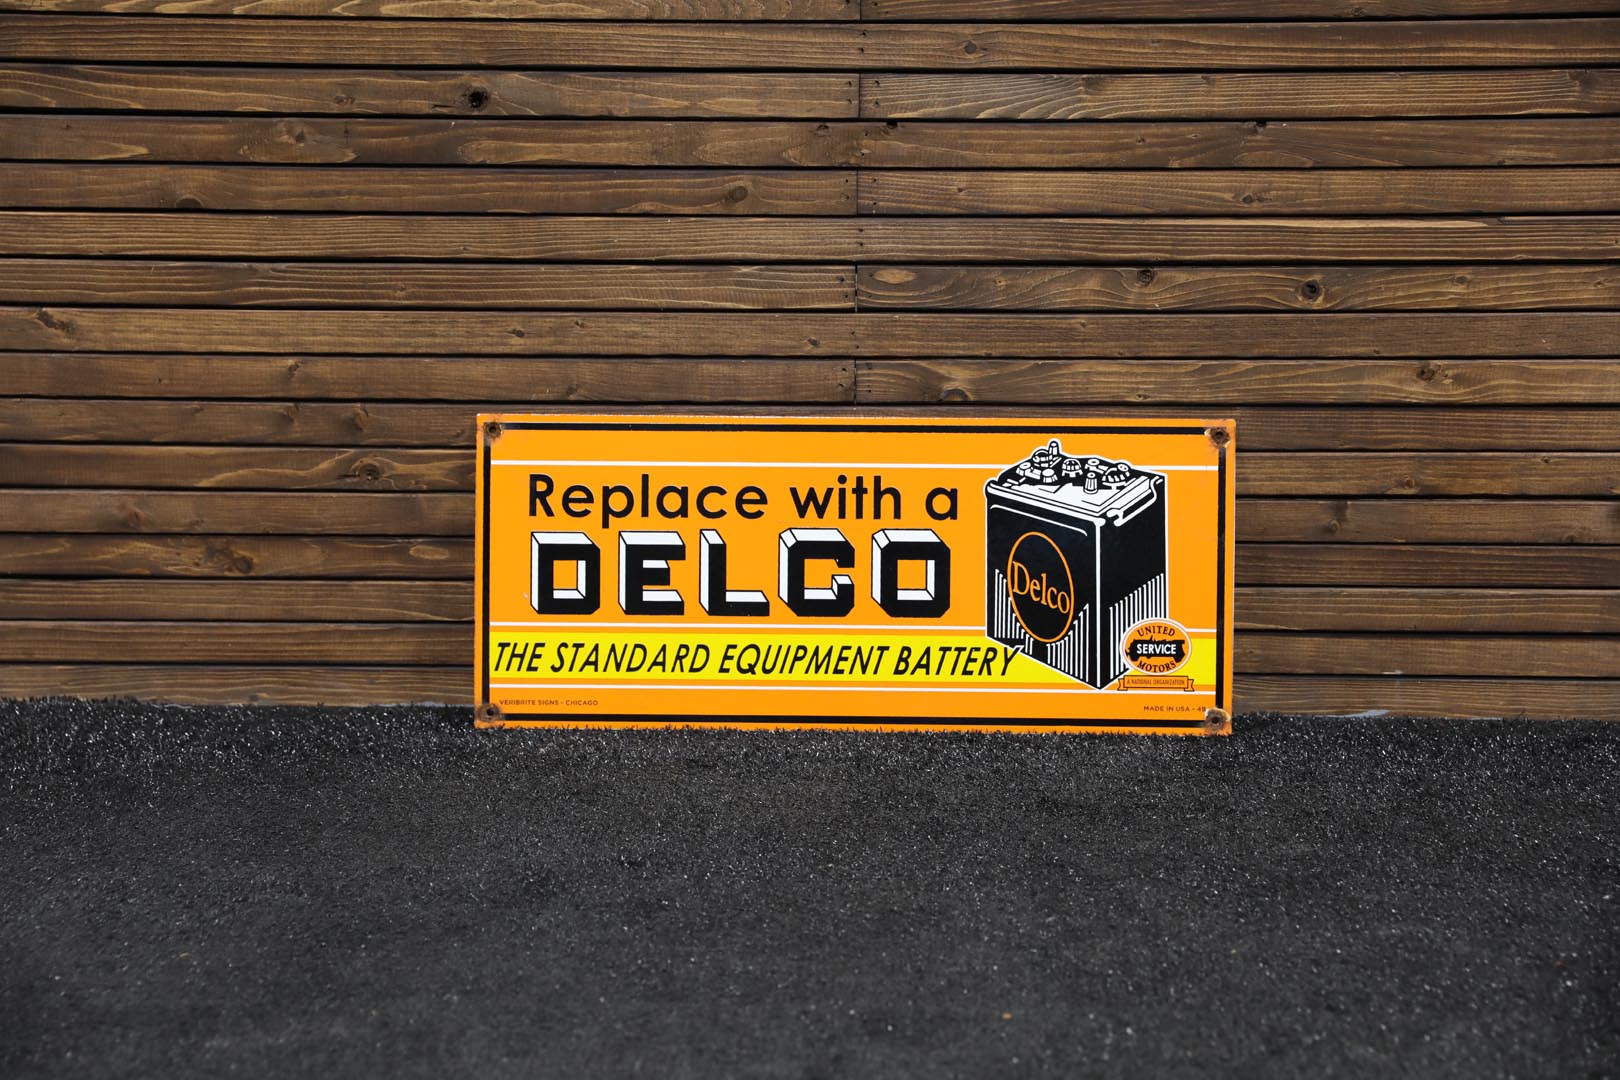  Delco Battery Single-Sided Por celain Sign 